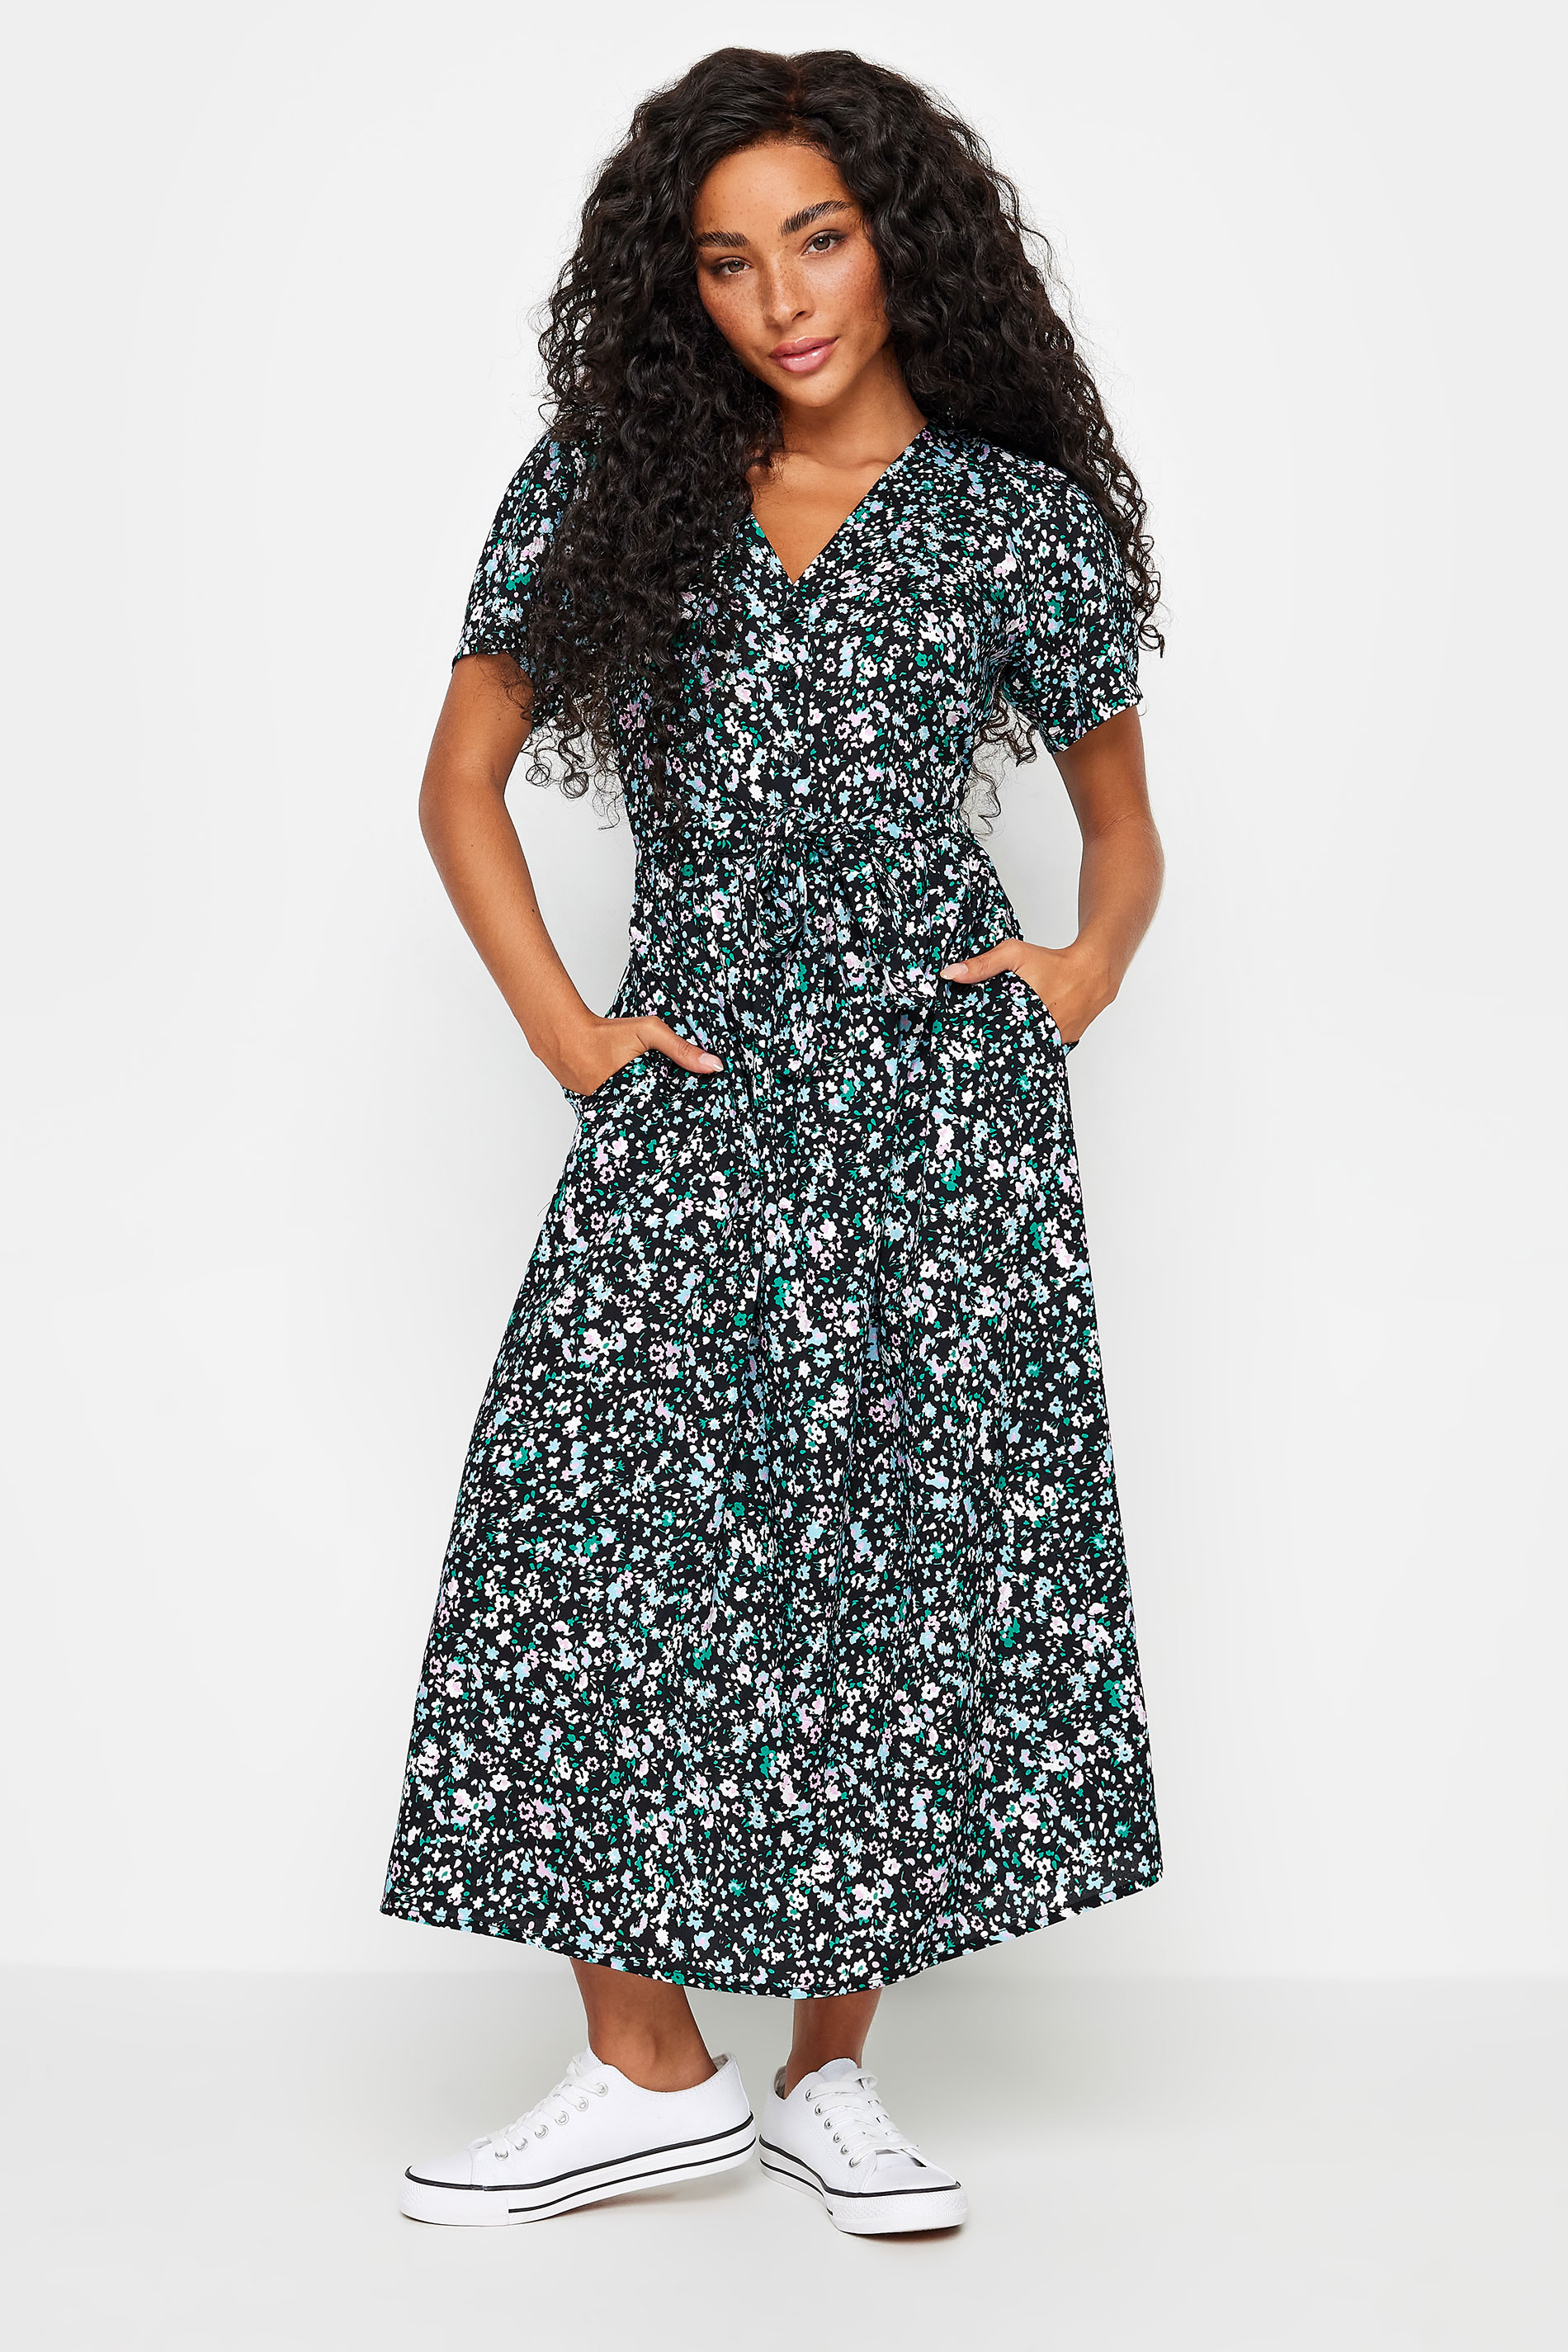 M&Co Petite Black Ditsy Floral Print Button Down Dress | M&Co 2